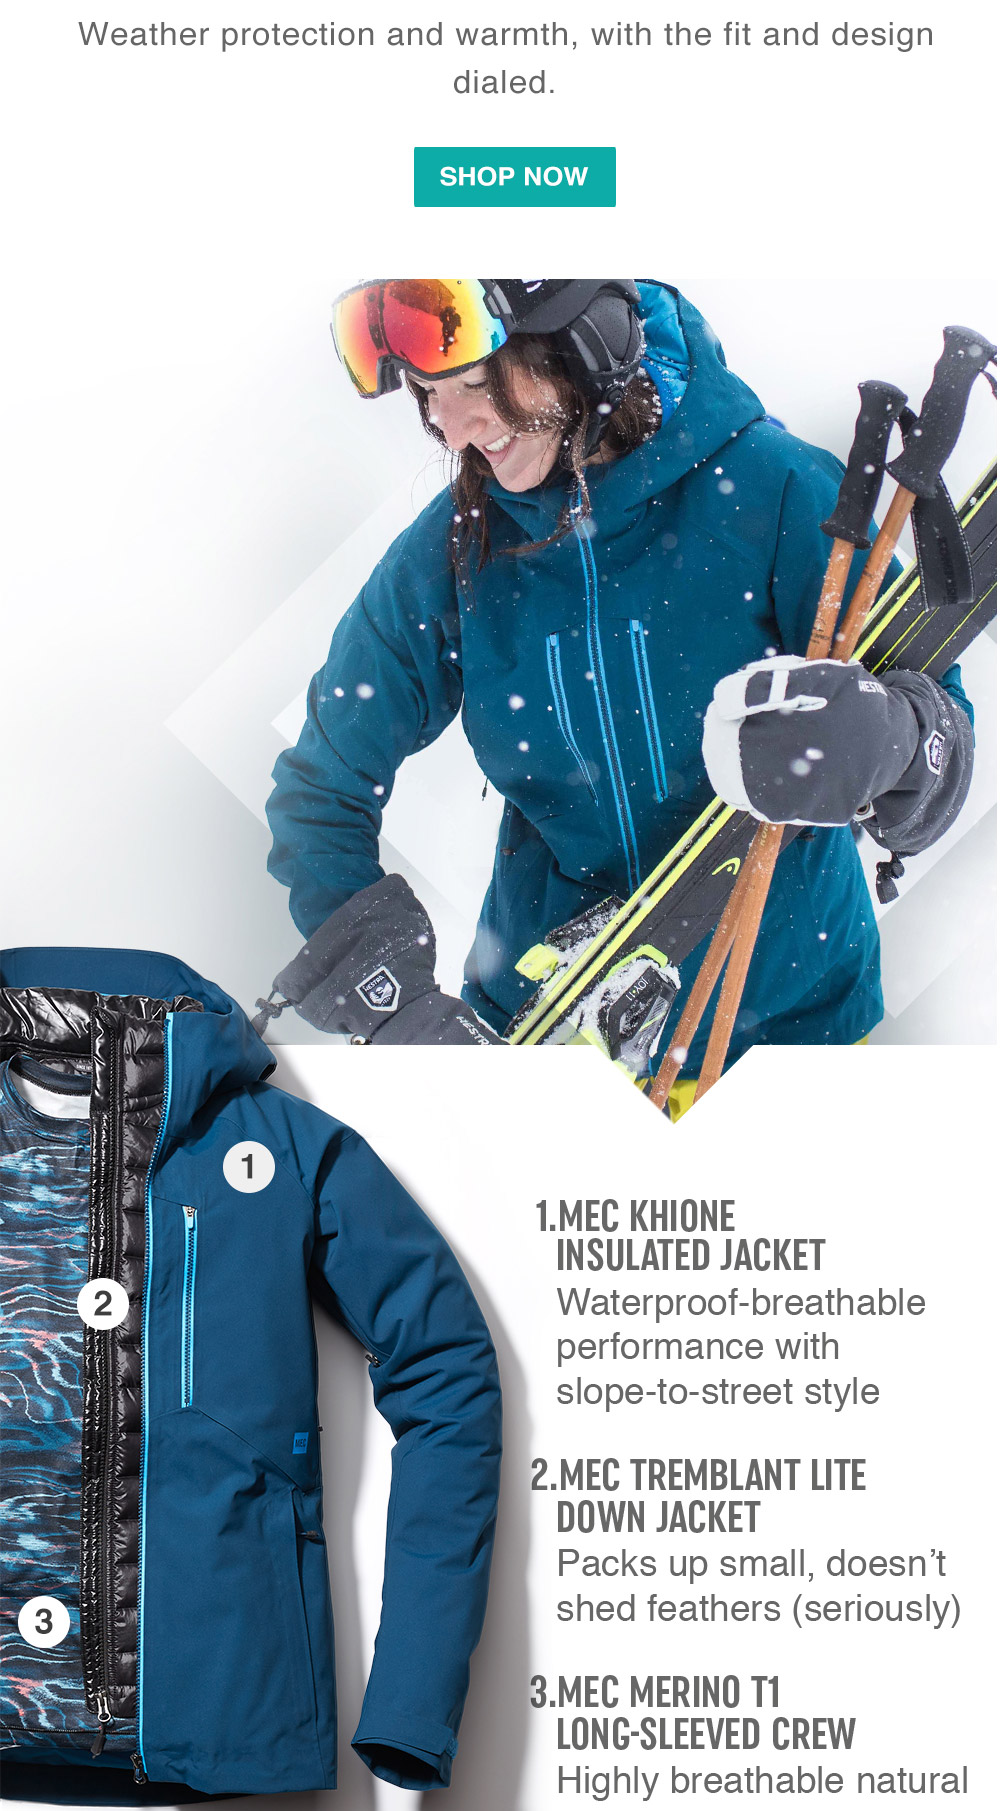 Mec outdoor promo photographer ski mountain equipment coop adventure photographer